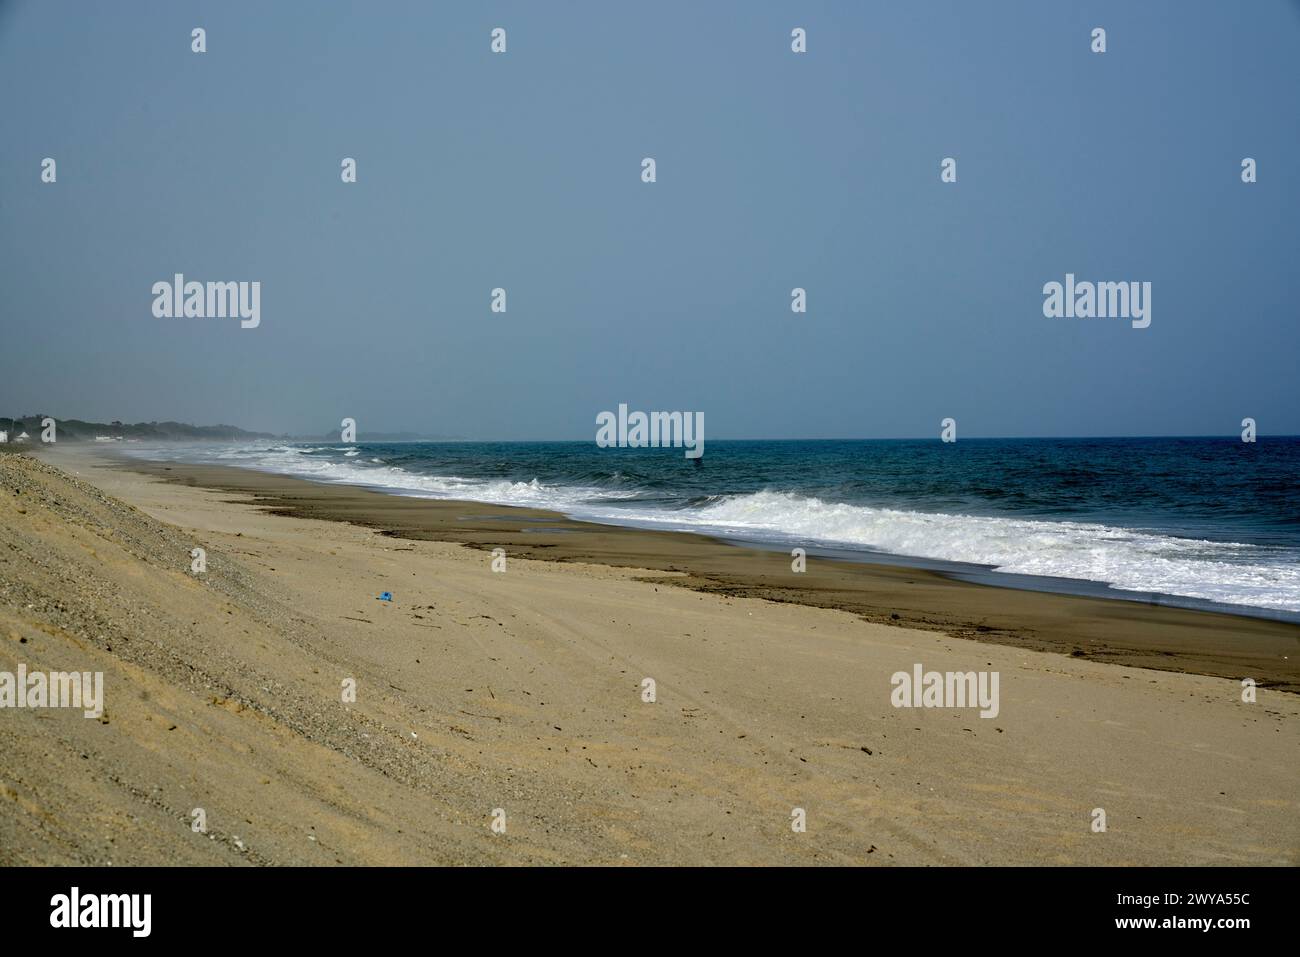 A beautiful sandy beach under a clear sky in Sellia Marina, Calabria, Italy Stock Photo